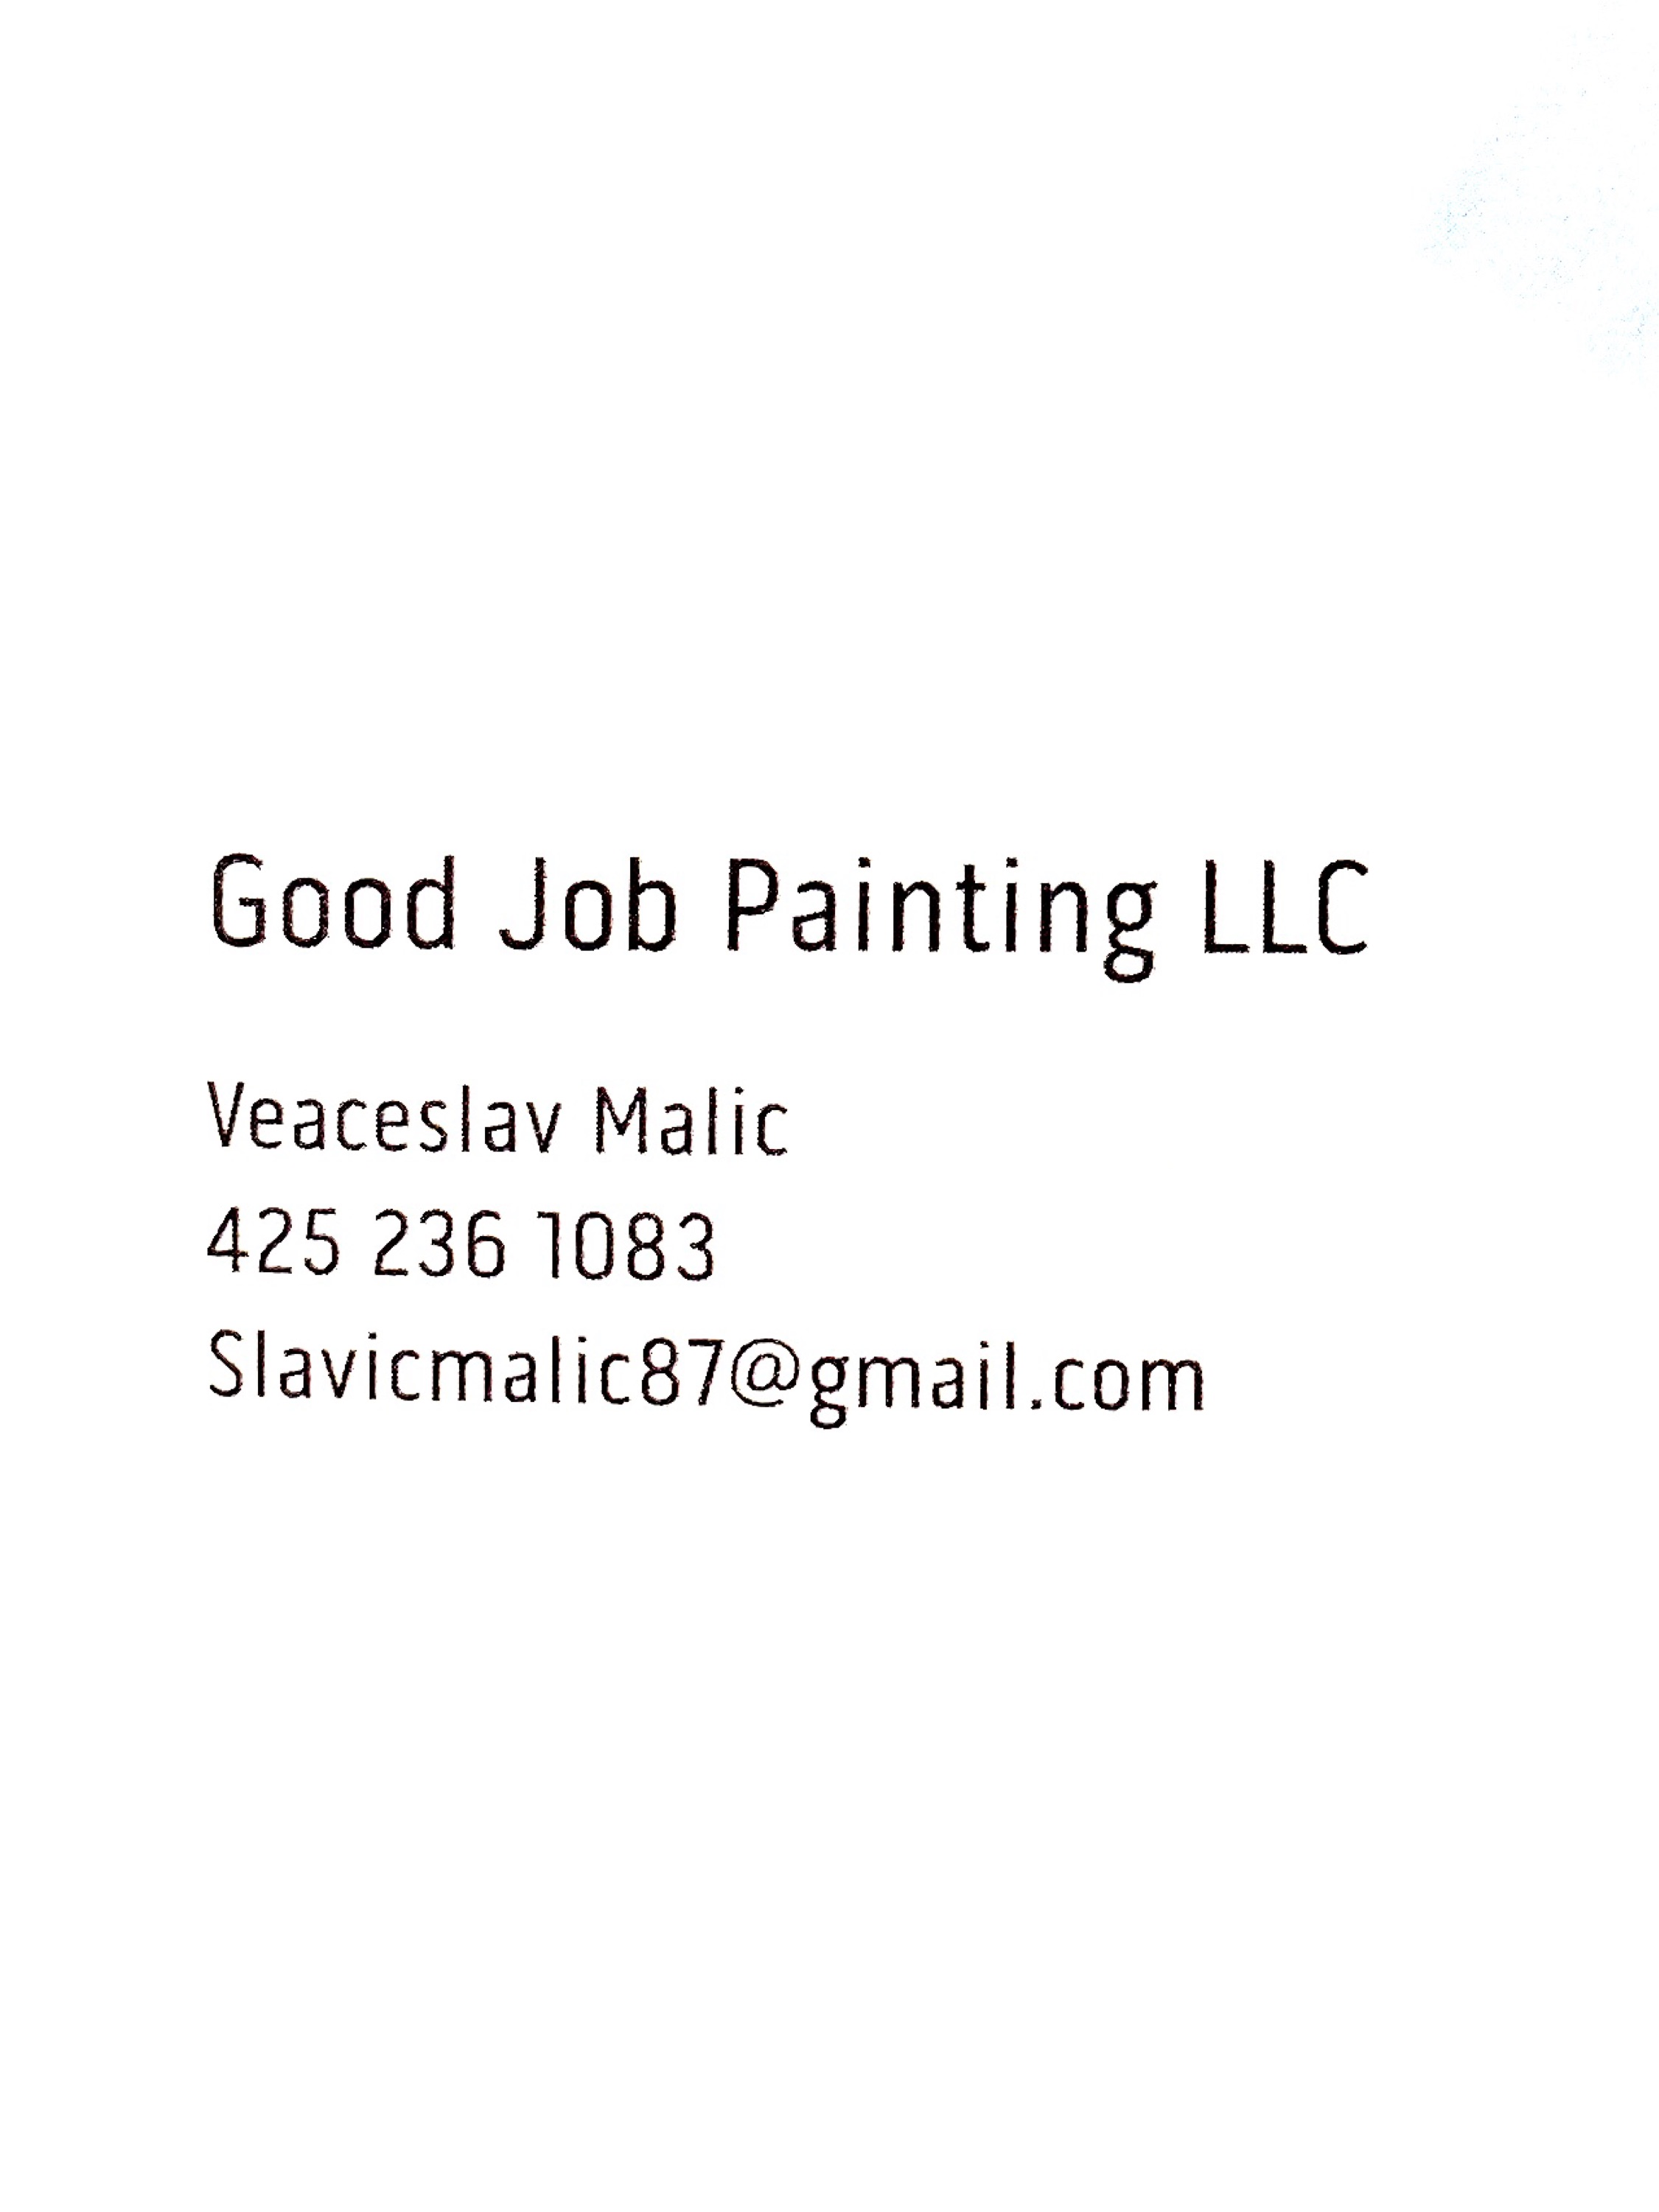 Good Job Painting, LLC Logo